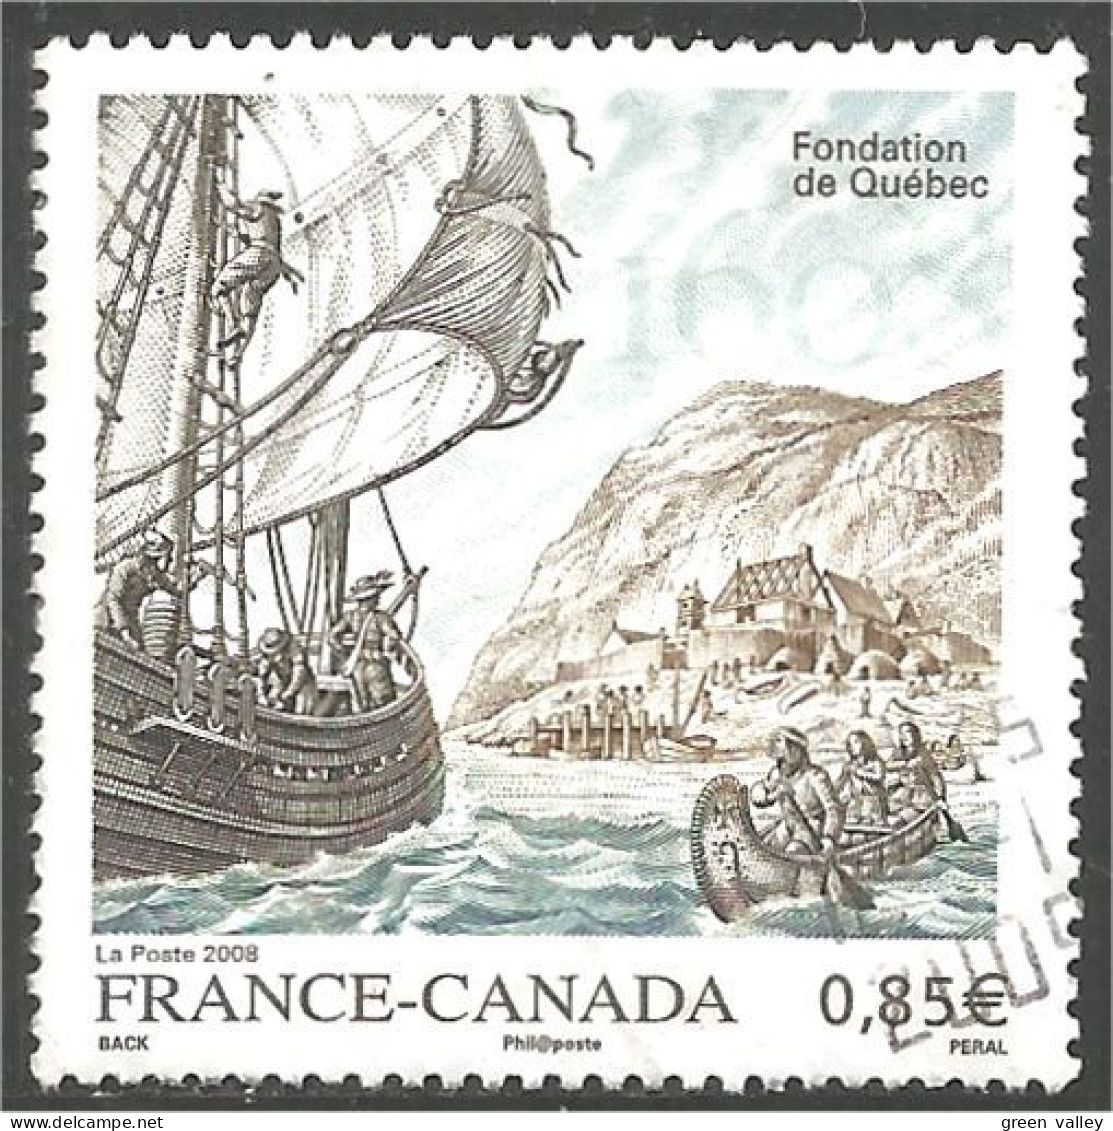 331eu-109 France Fondation Québec Foundation Canot Canoe Indien Indian - Indianen